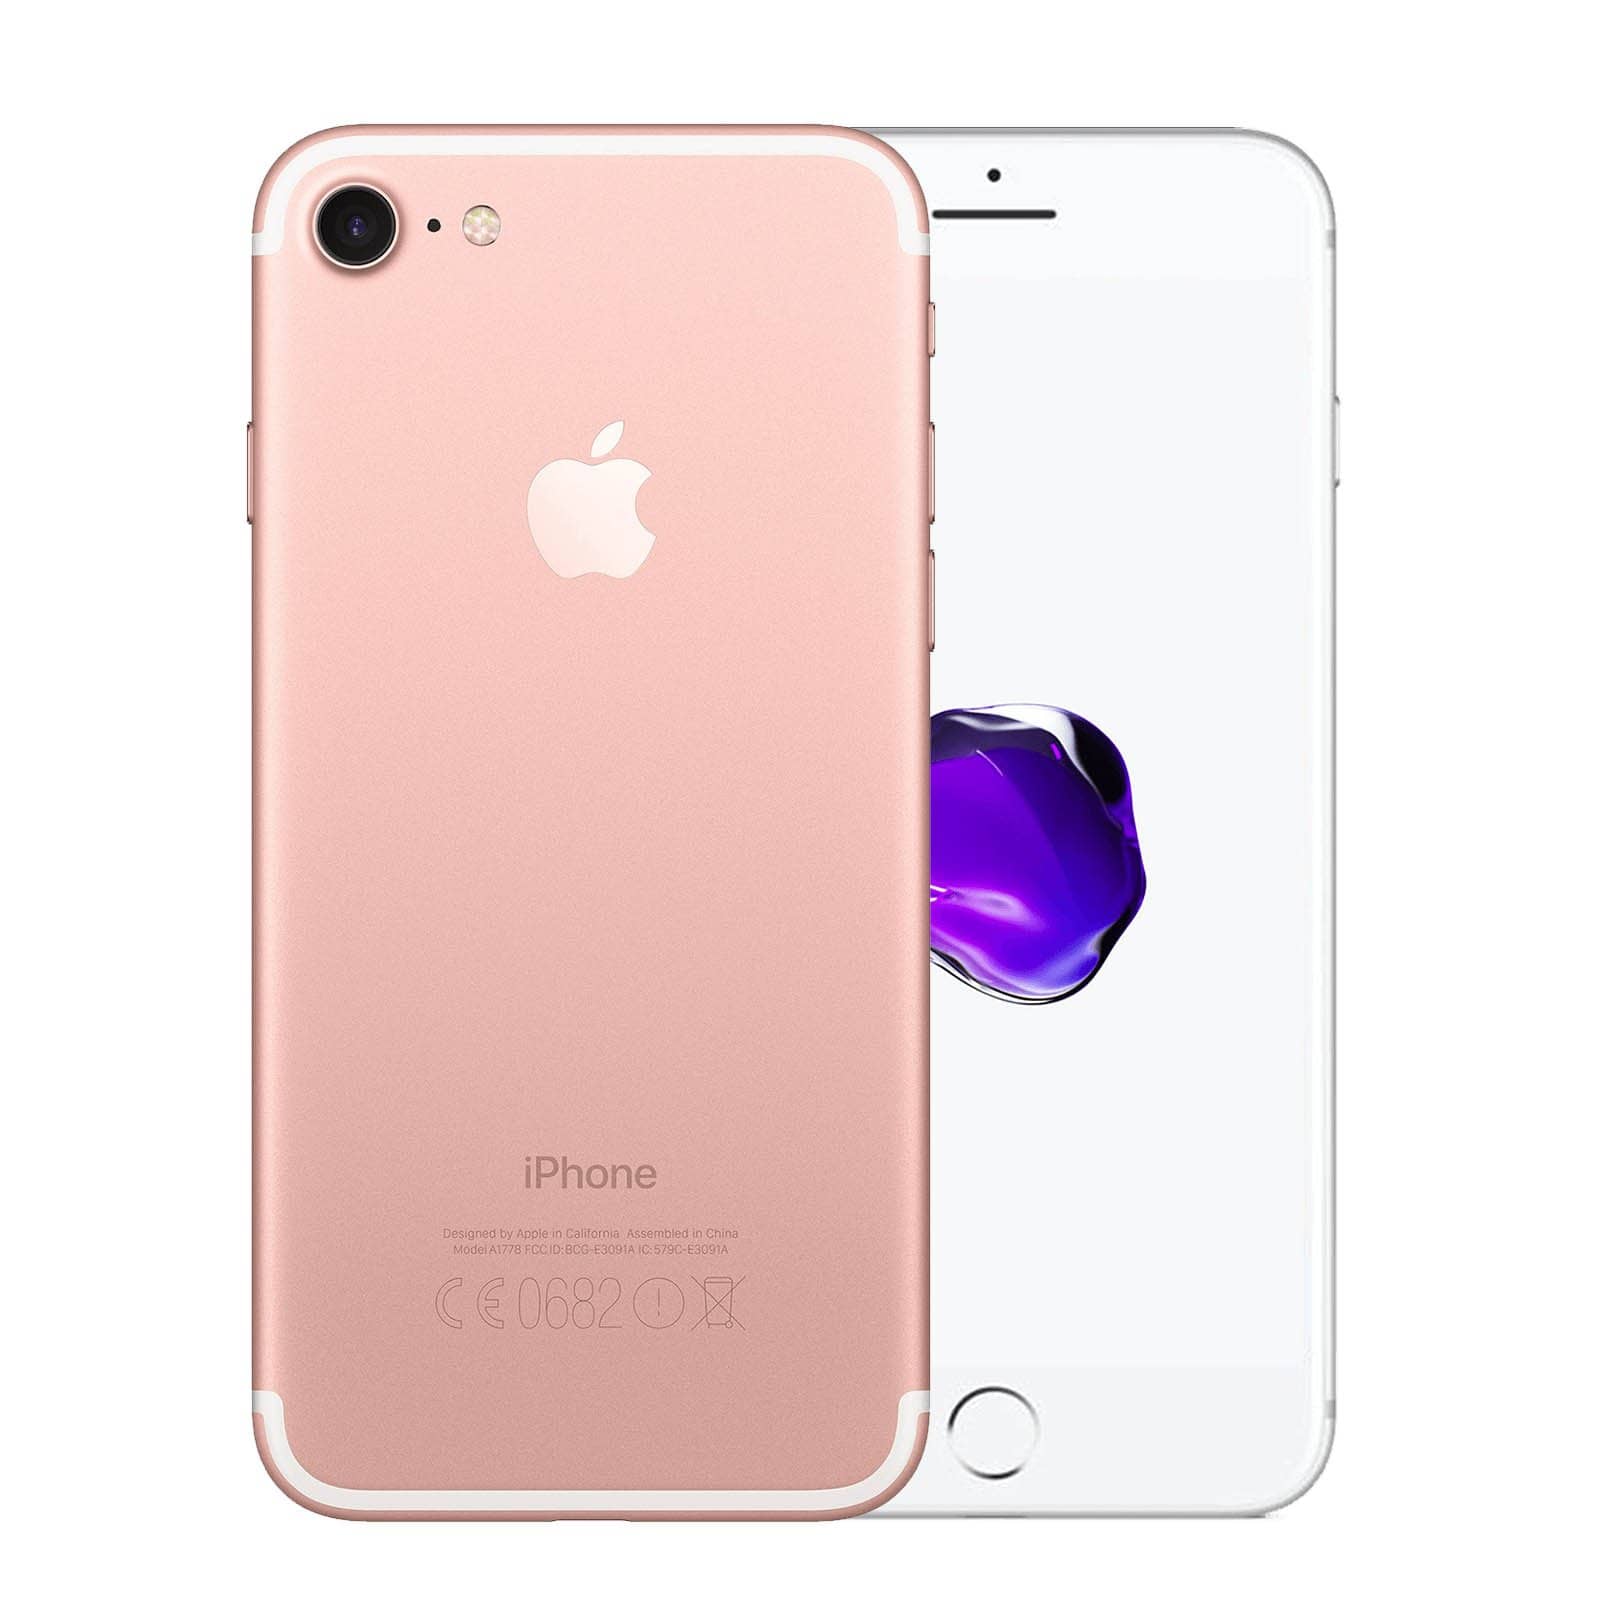 Apple iPhone 7 32GB Rose Gold Good - Unlocked 32GB Rose Gold Good